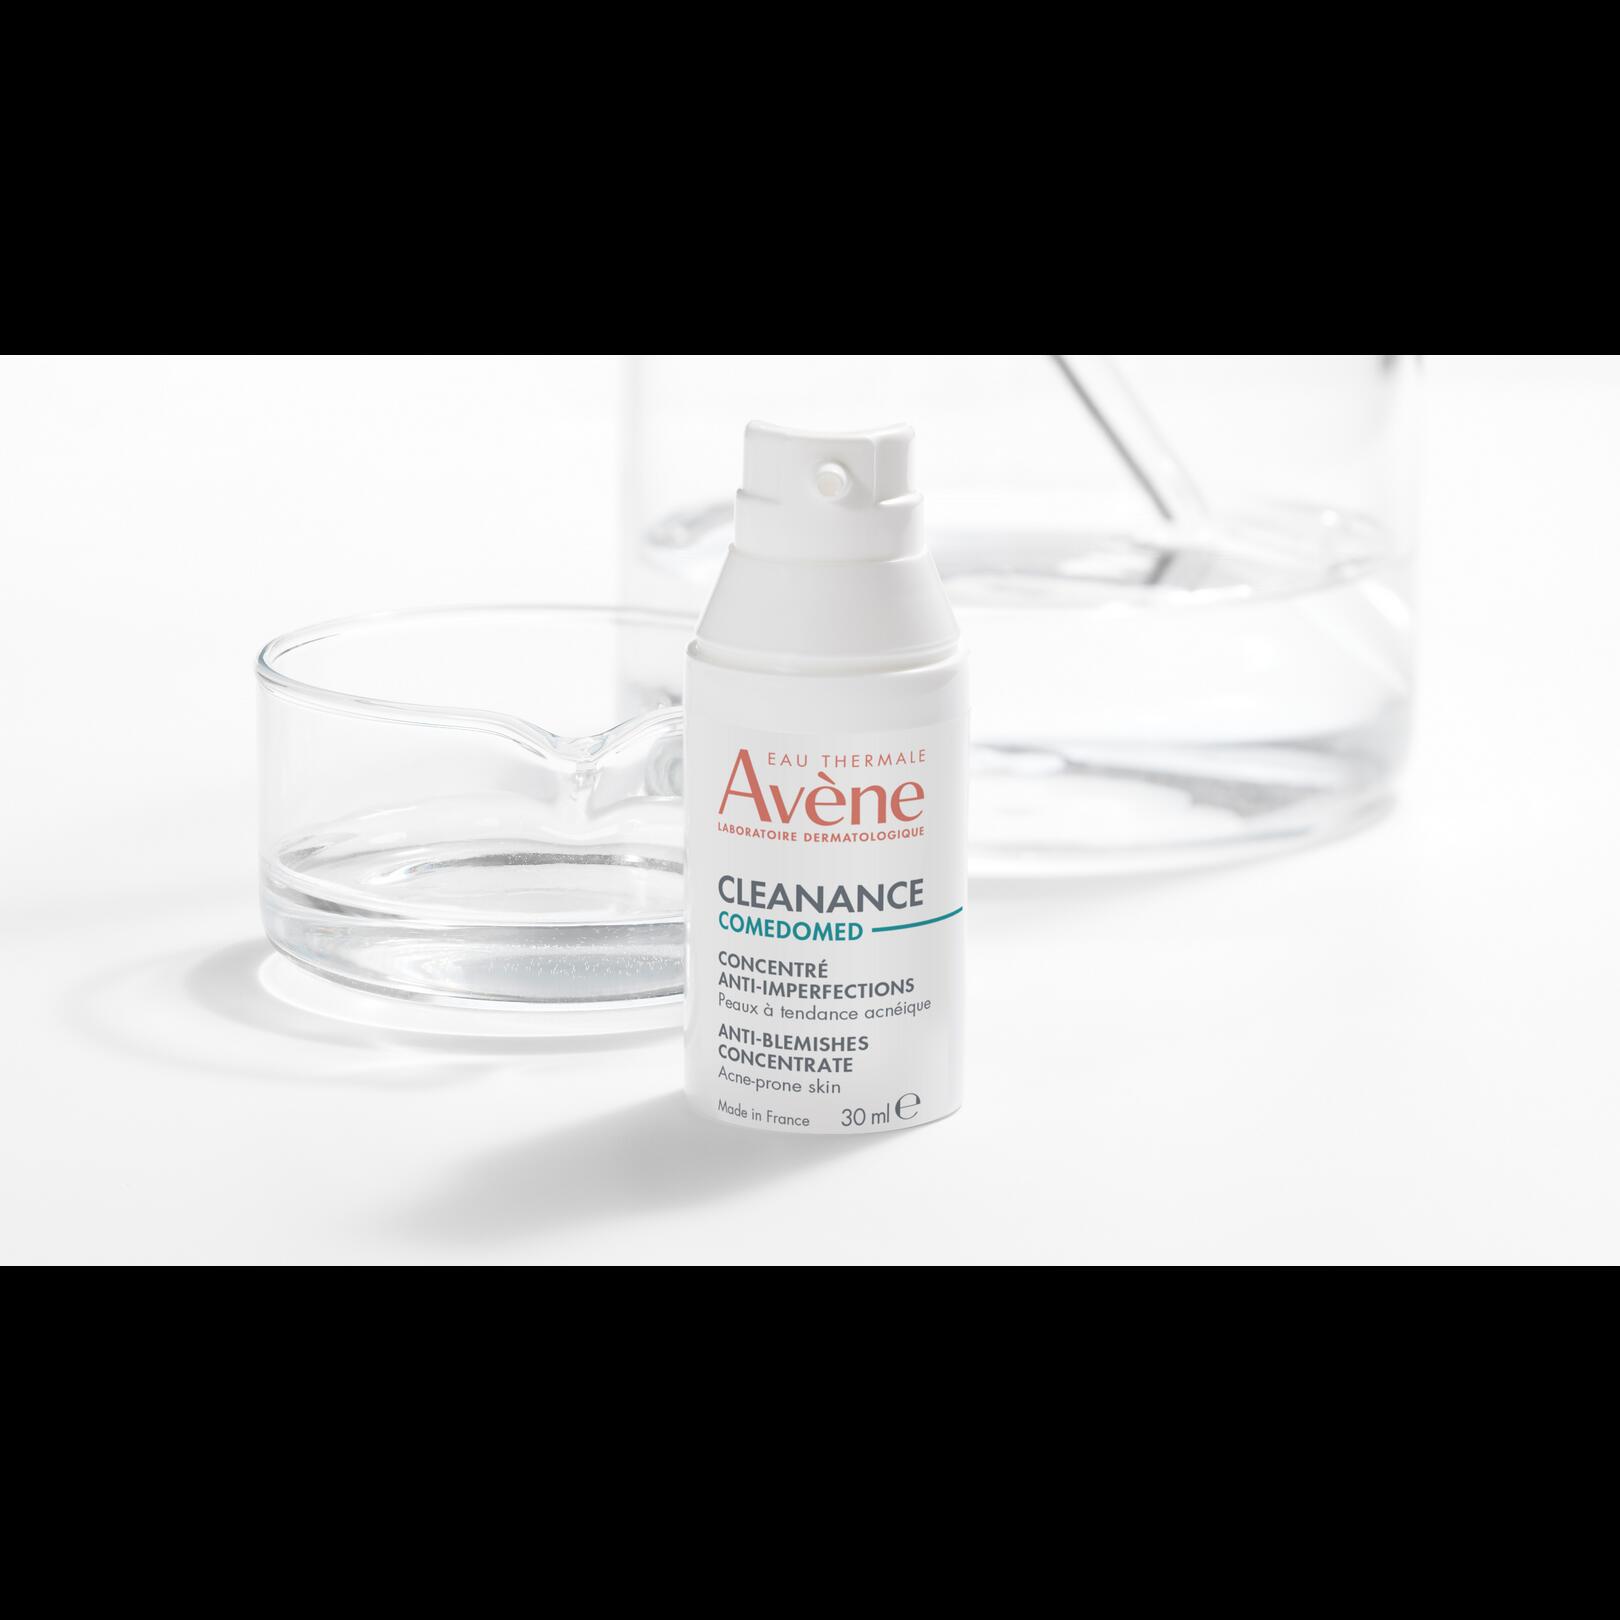 Avene Cleanance Woman Corrective Serum - Blemish-prone Skin